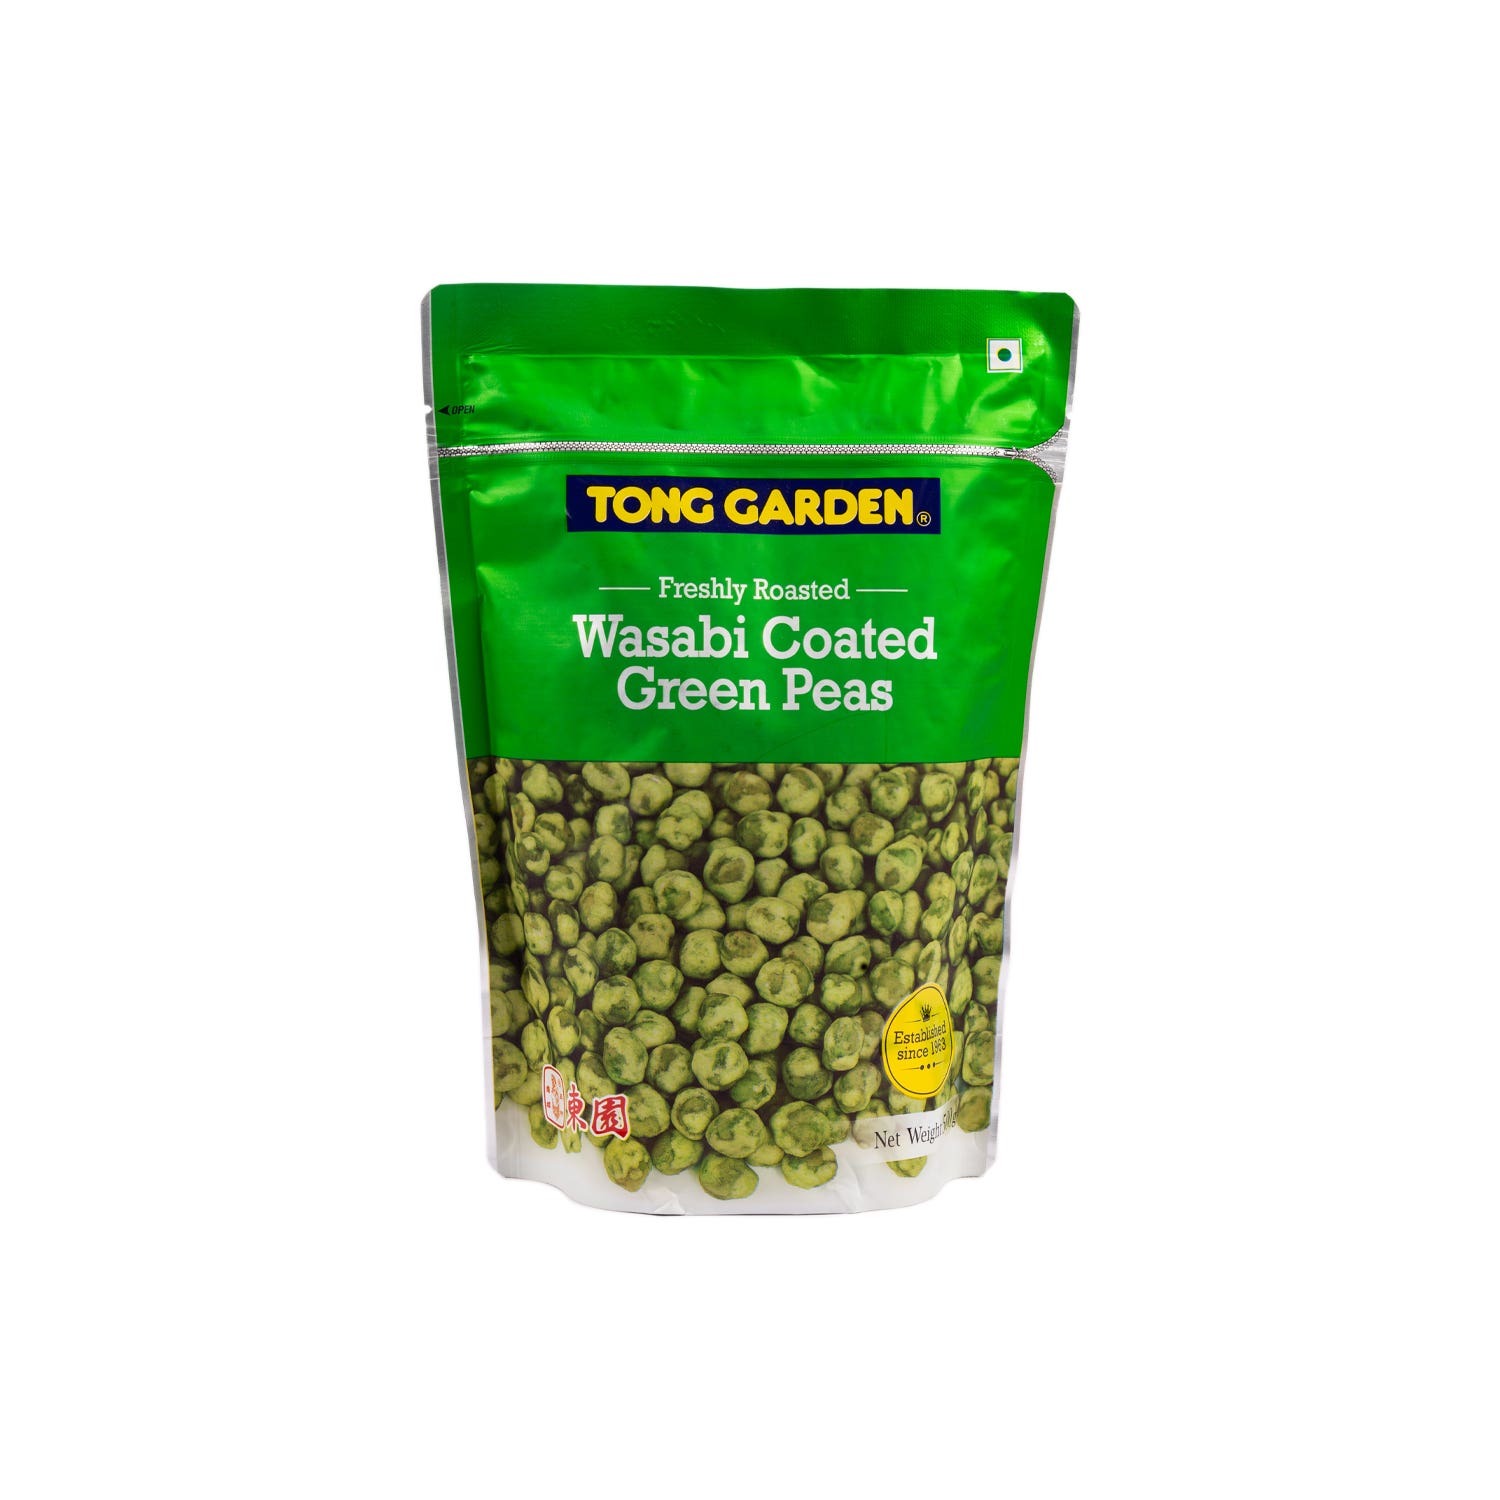 Tong Garden Wasabi Coated Green Peas 500G Pkt